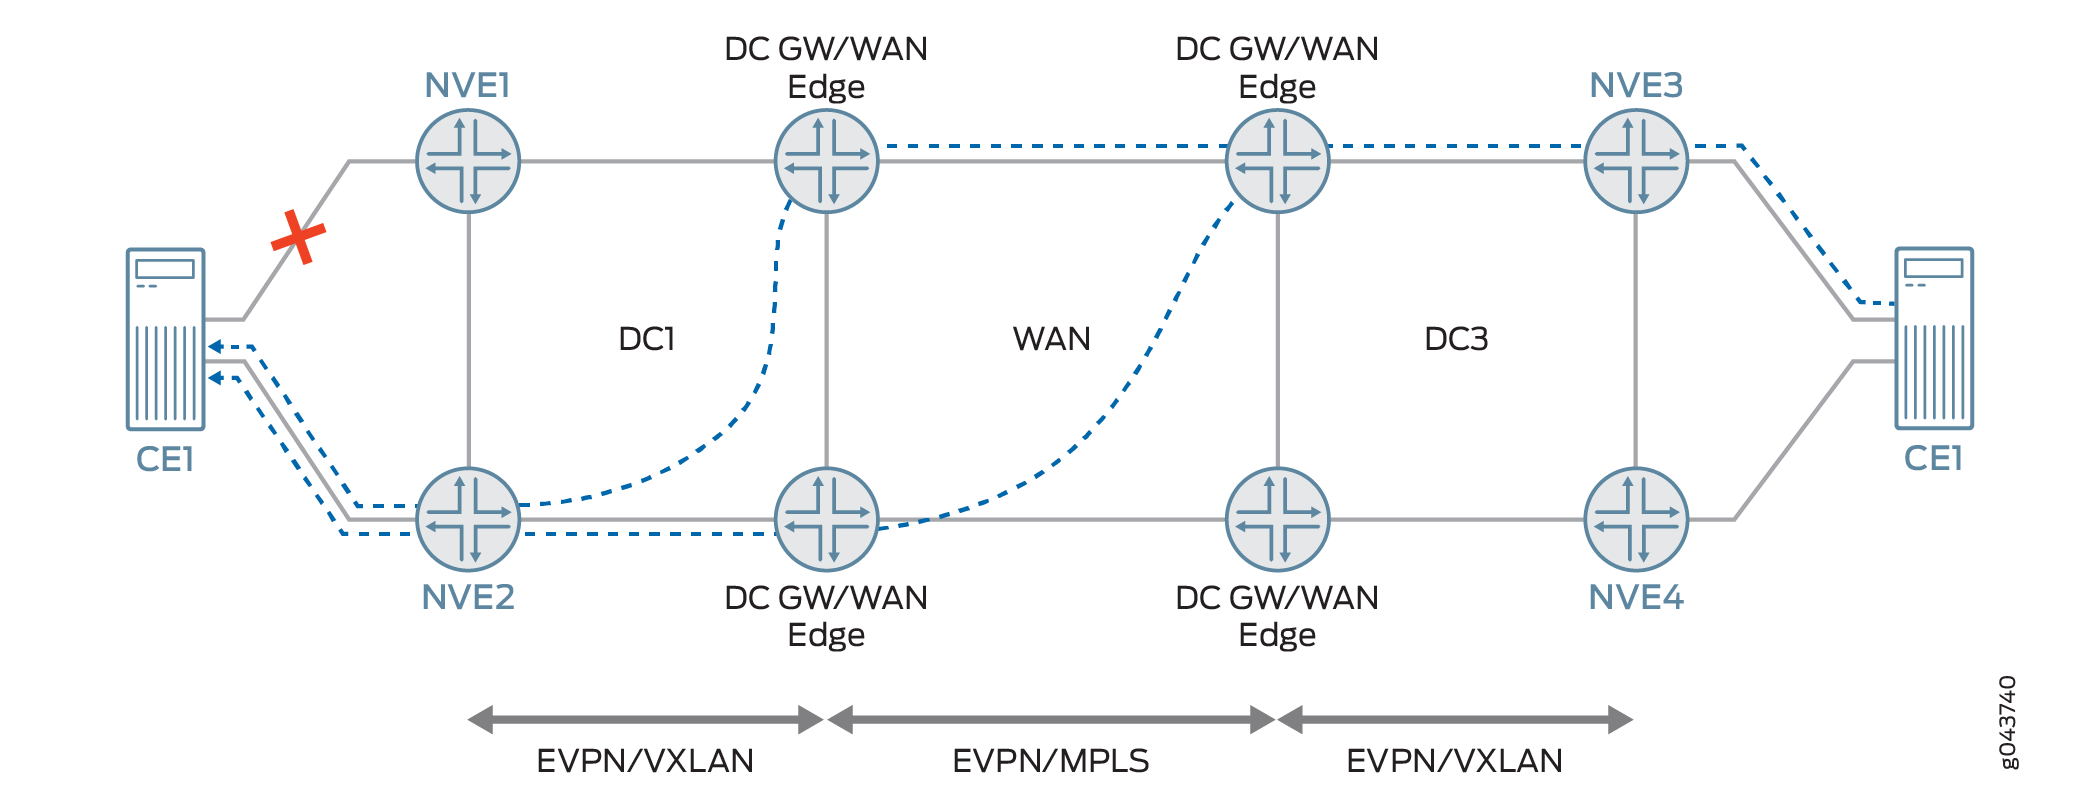 Load Balancing Among Redundant DC GW/WAN Edge Routers